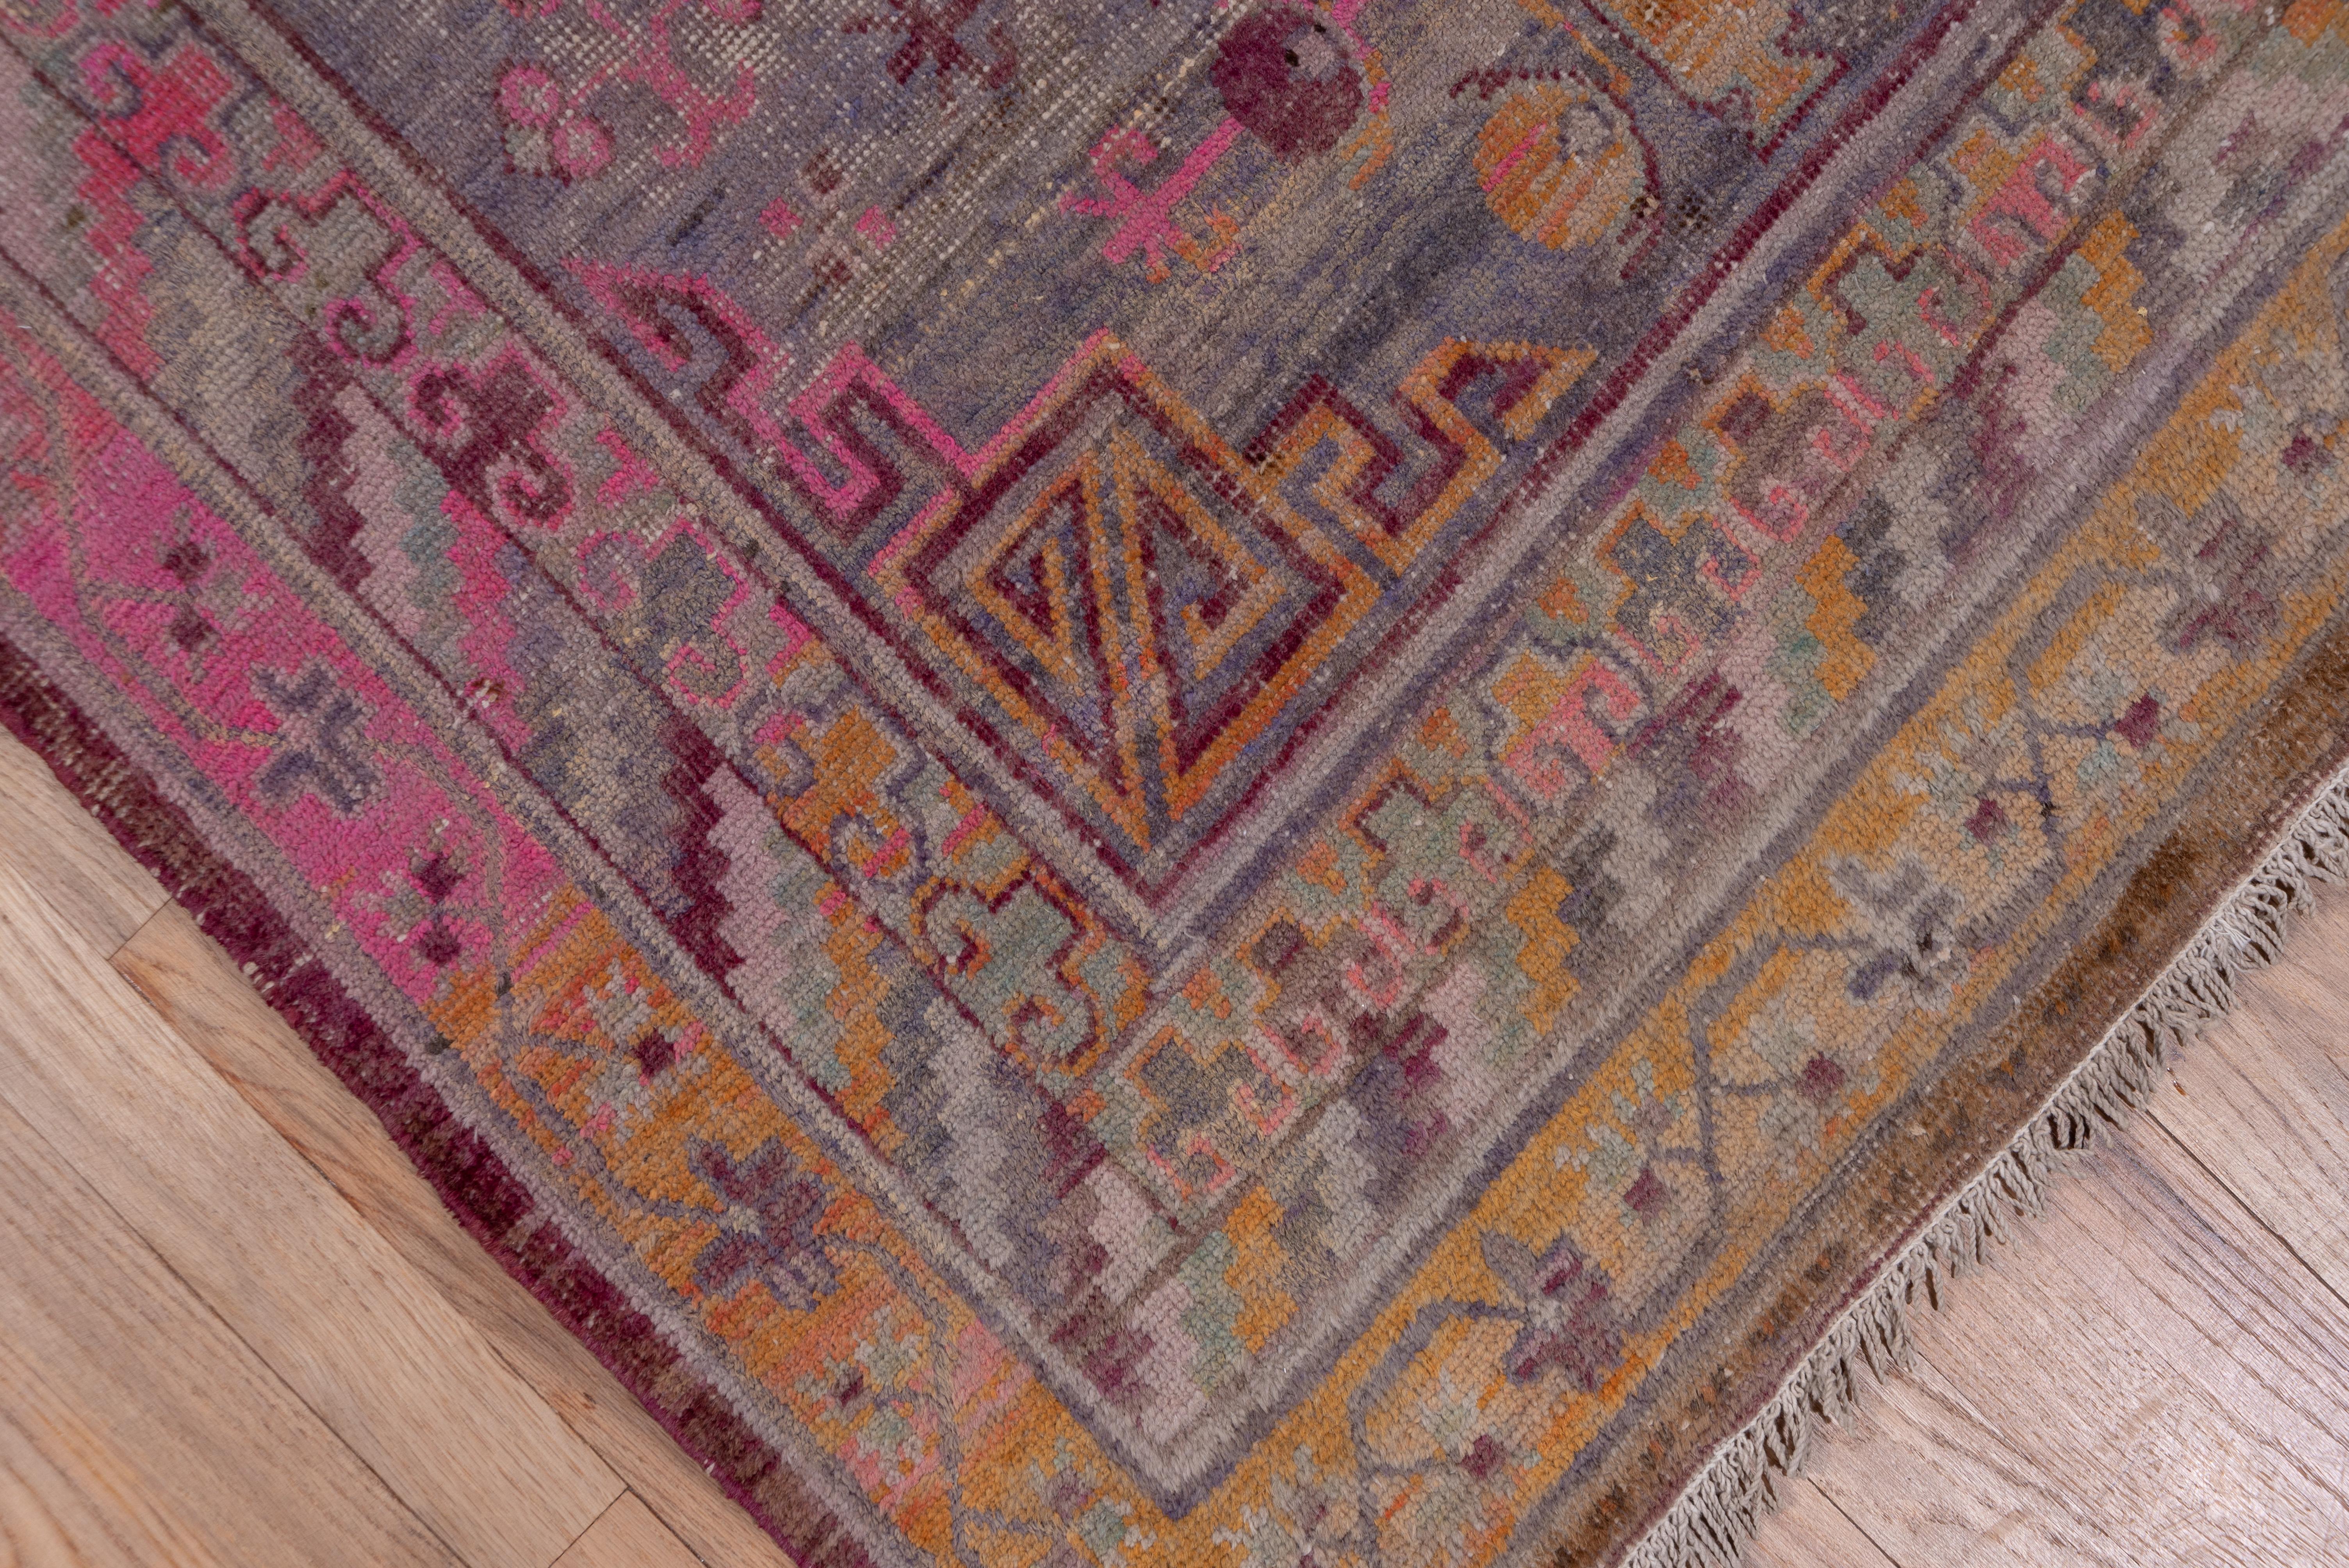 East Turkestani Colorful Antique Khotan Rug, Purple Pink and Orange Tones For Sale